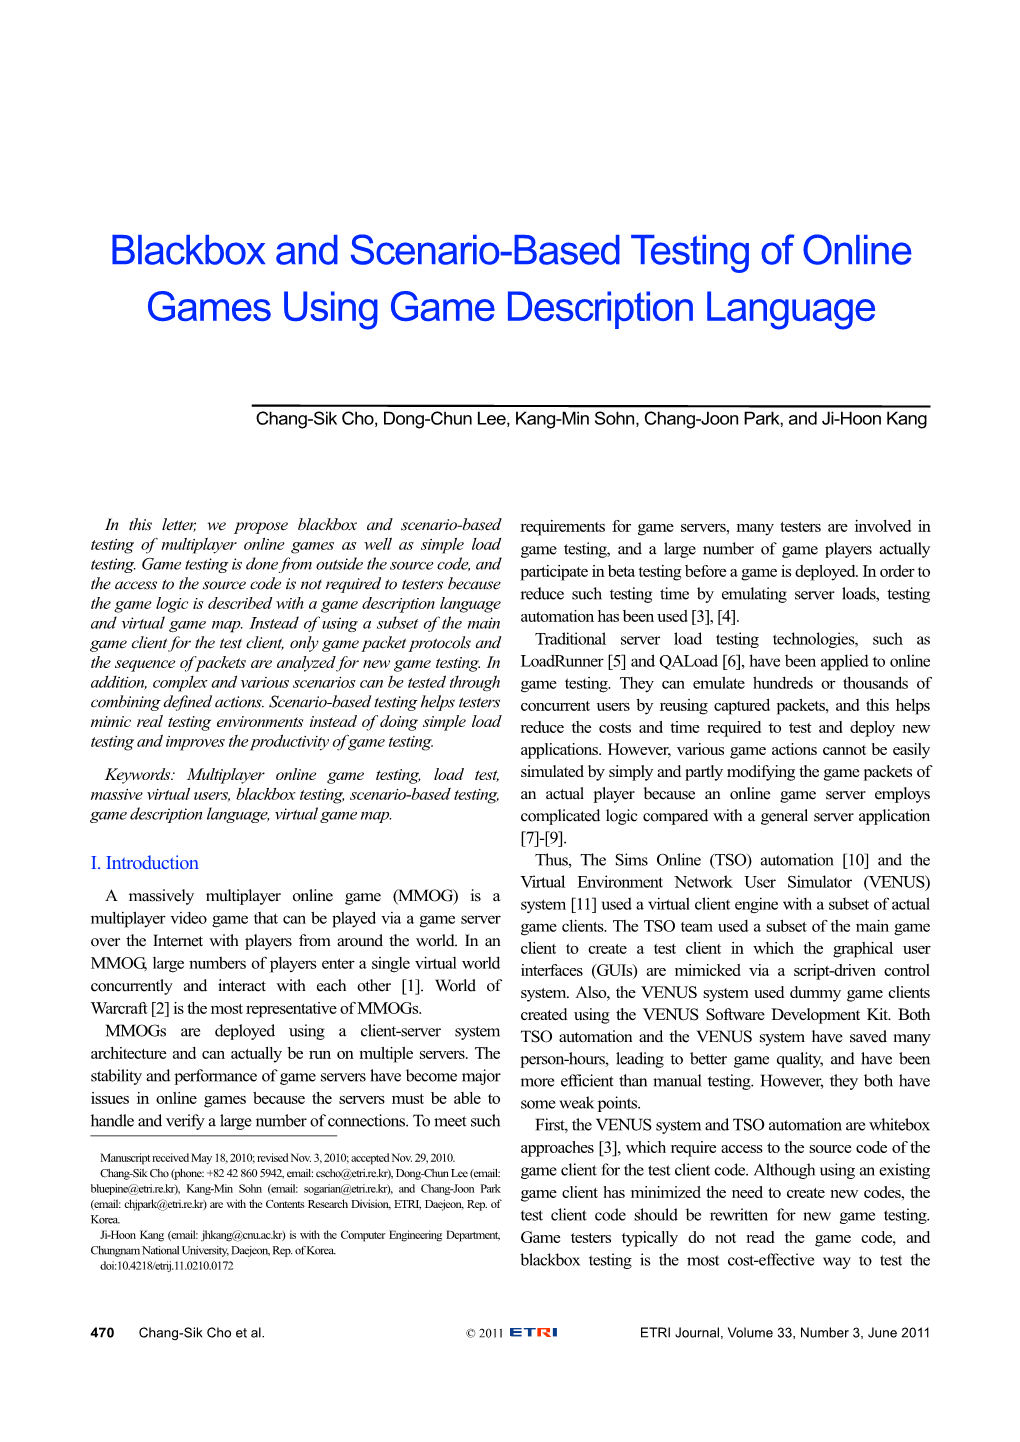 Blackbox and Scenario-Based Testing of Online Games Using Game Description Language